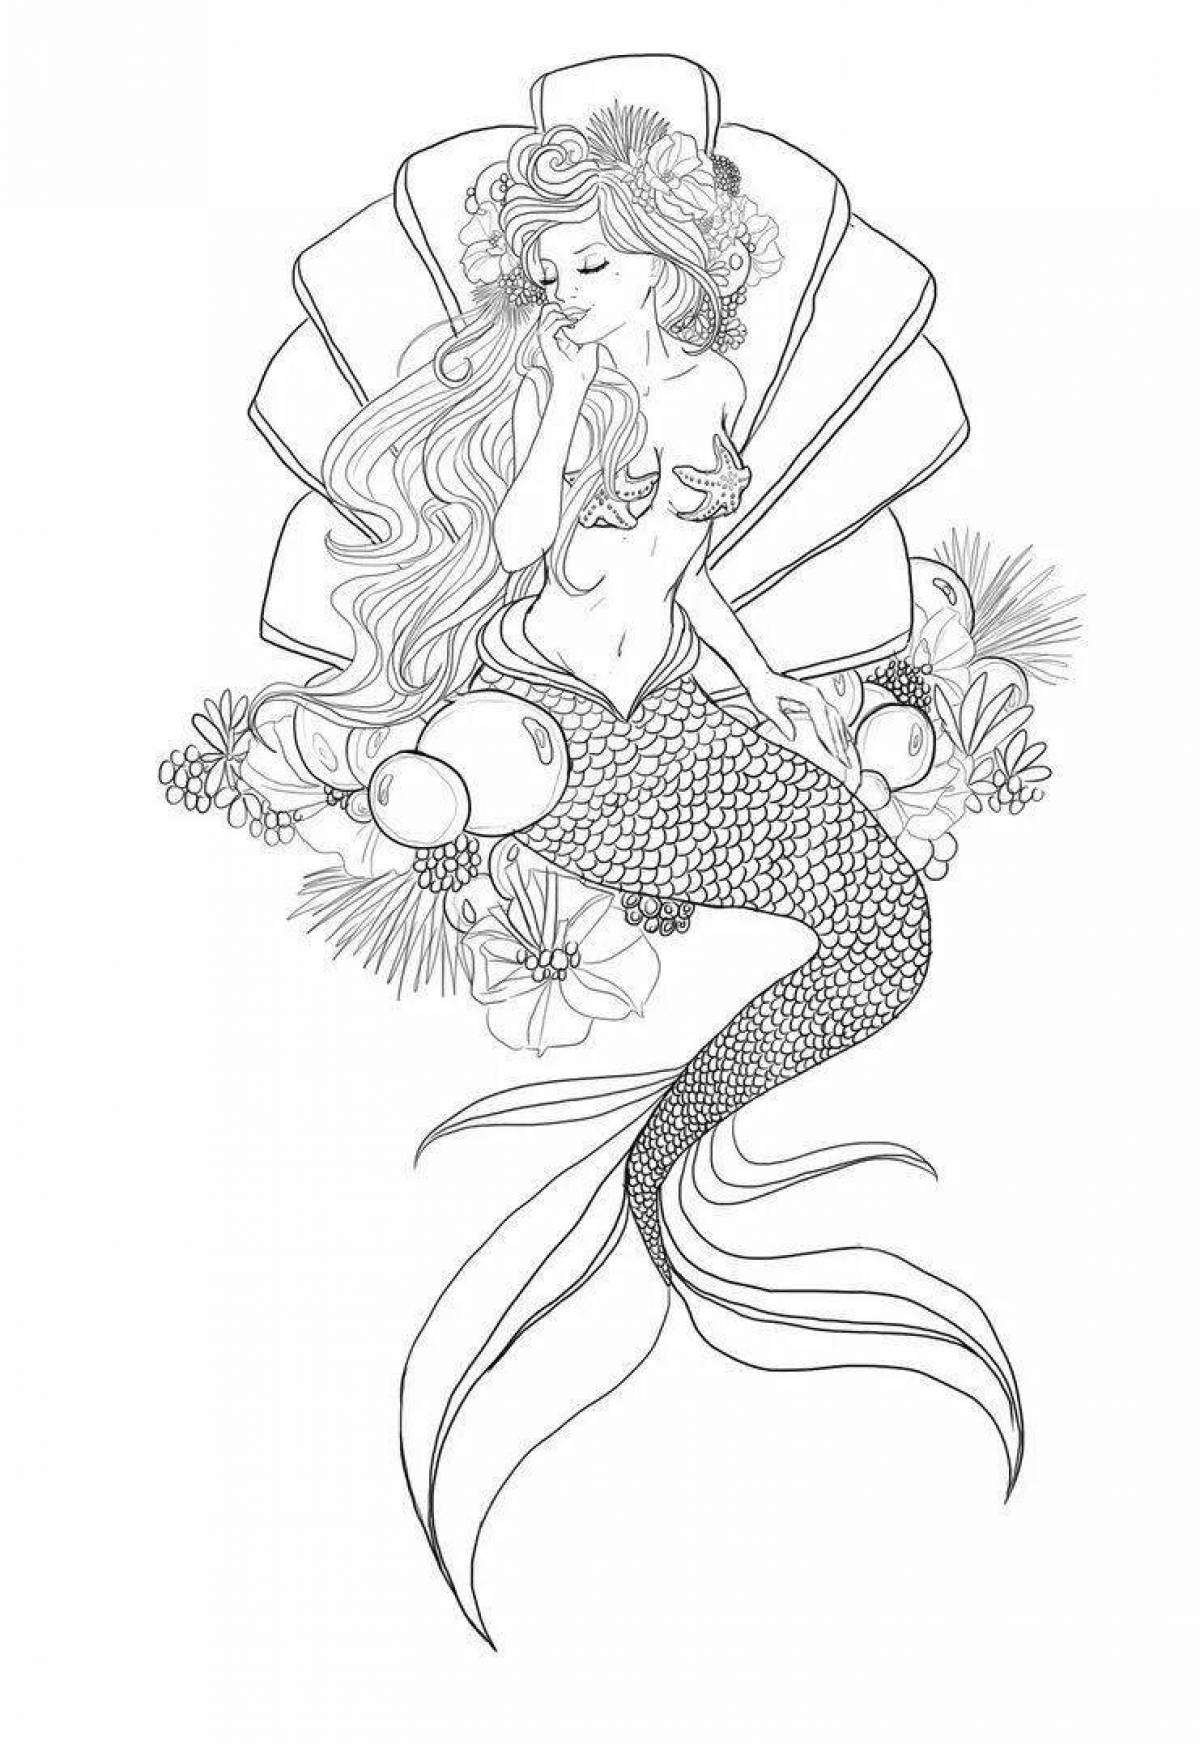 Beautiful coloring drawing of a mermaid